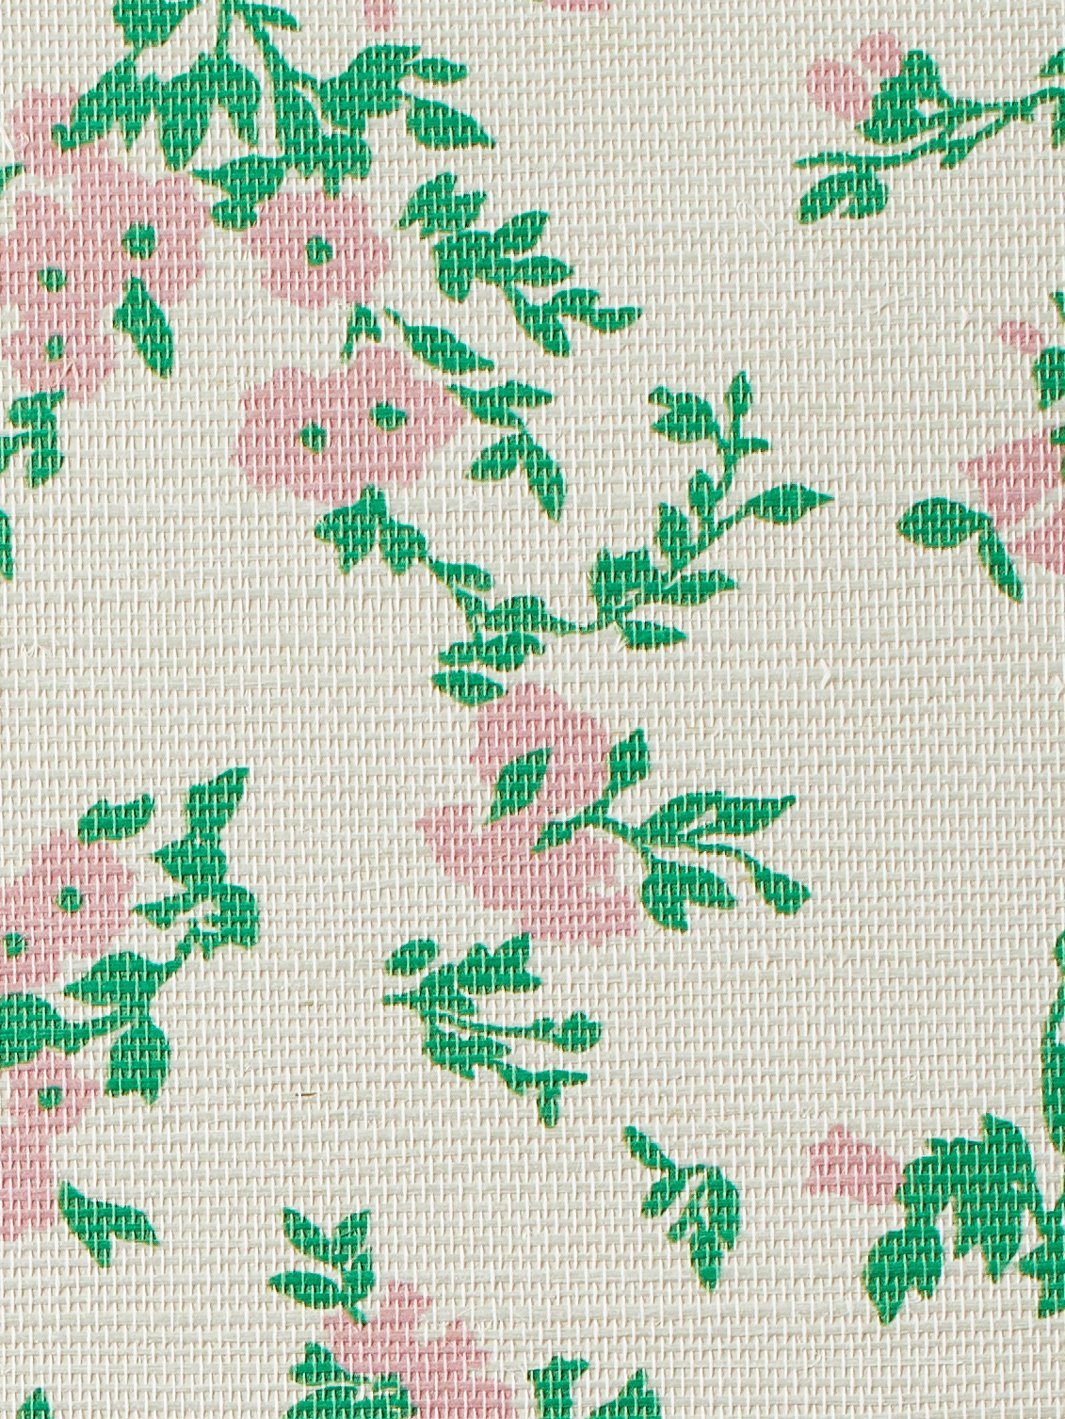 'Francoise Floral' Grasscloth' Wallpaper by Clare V. - Pink